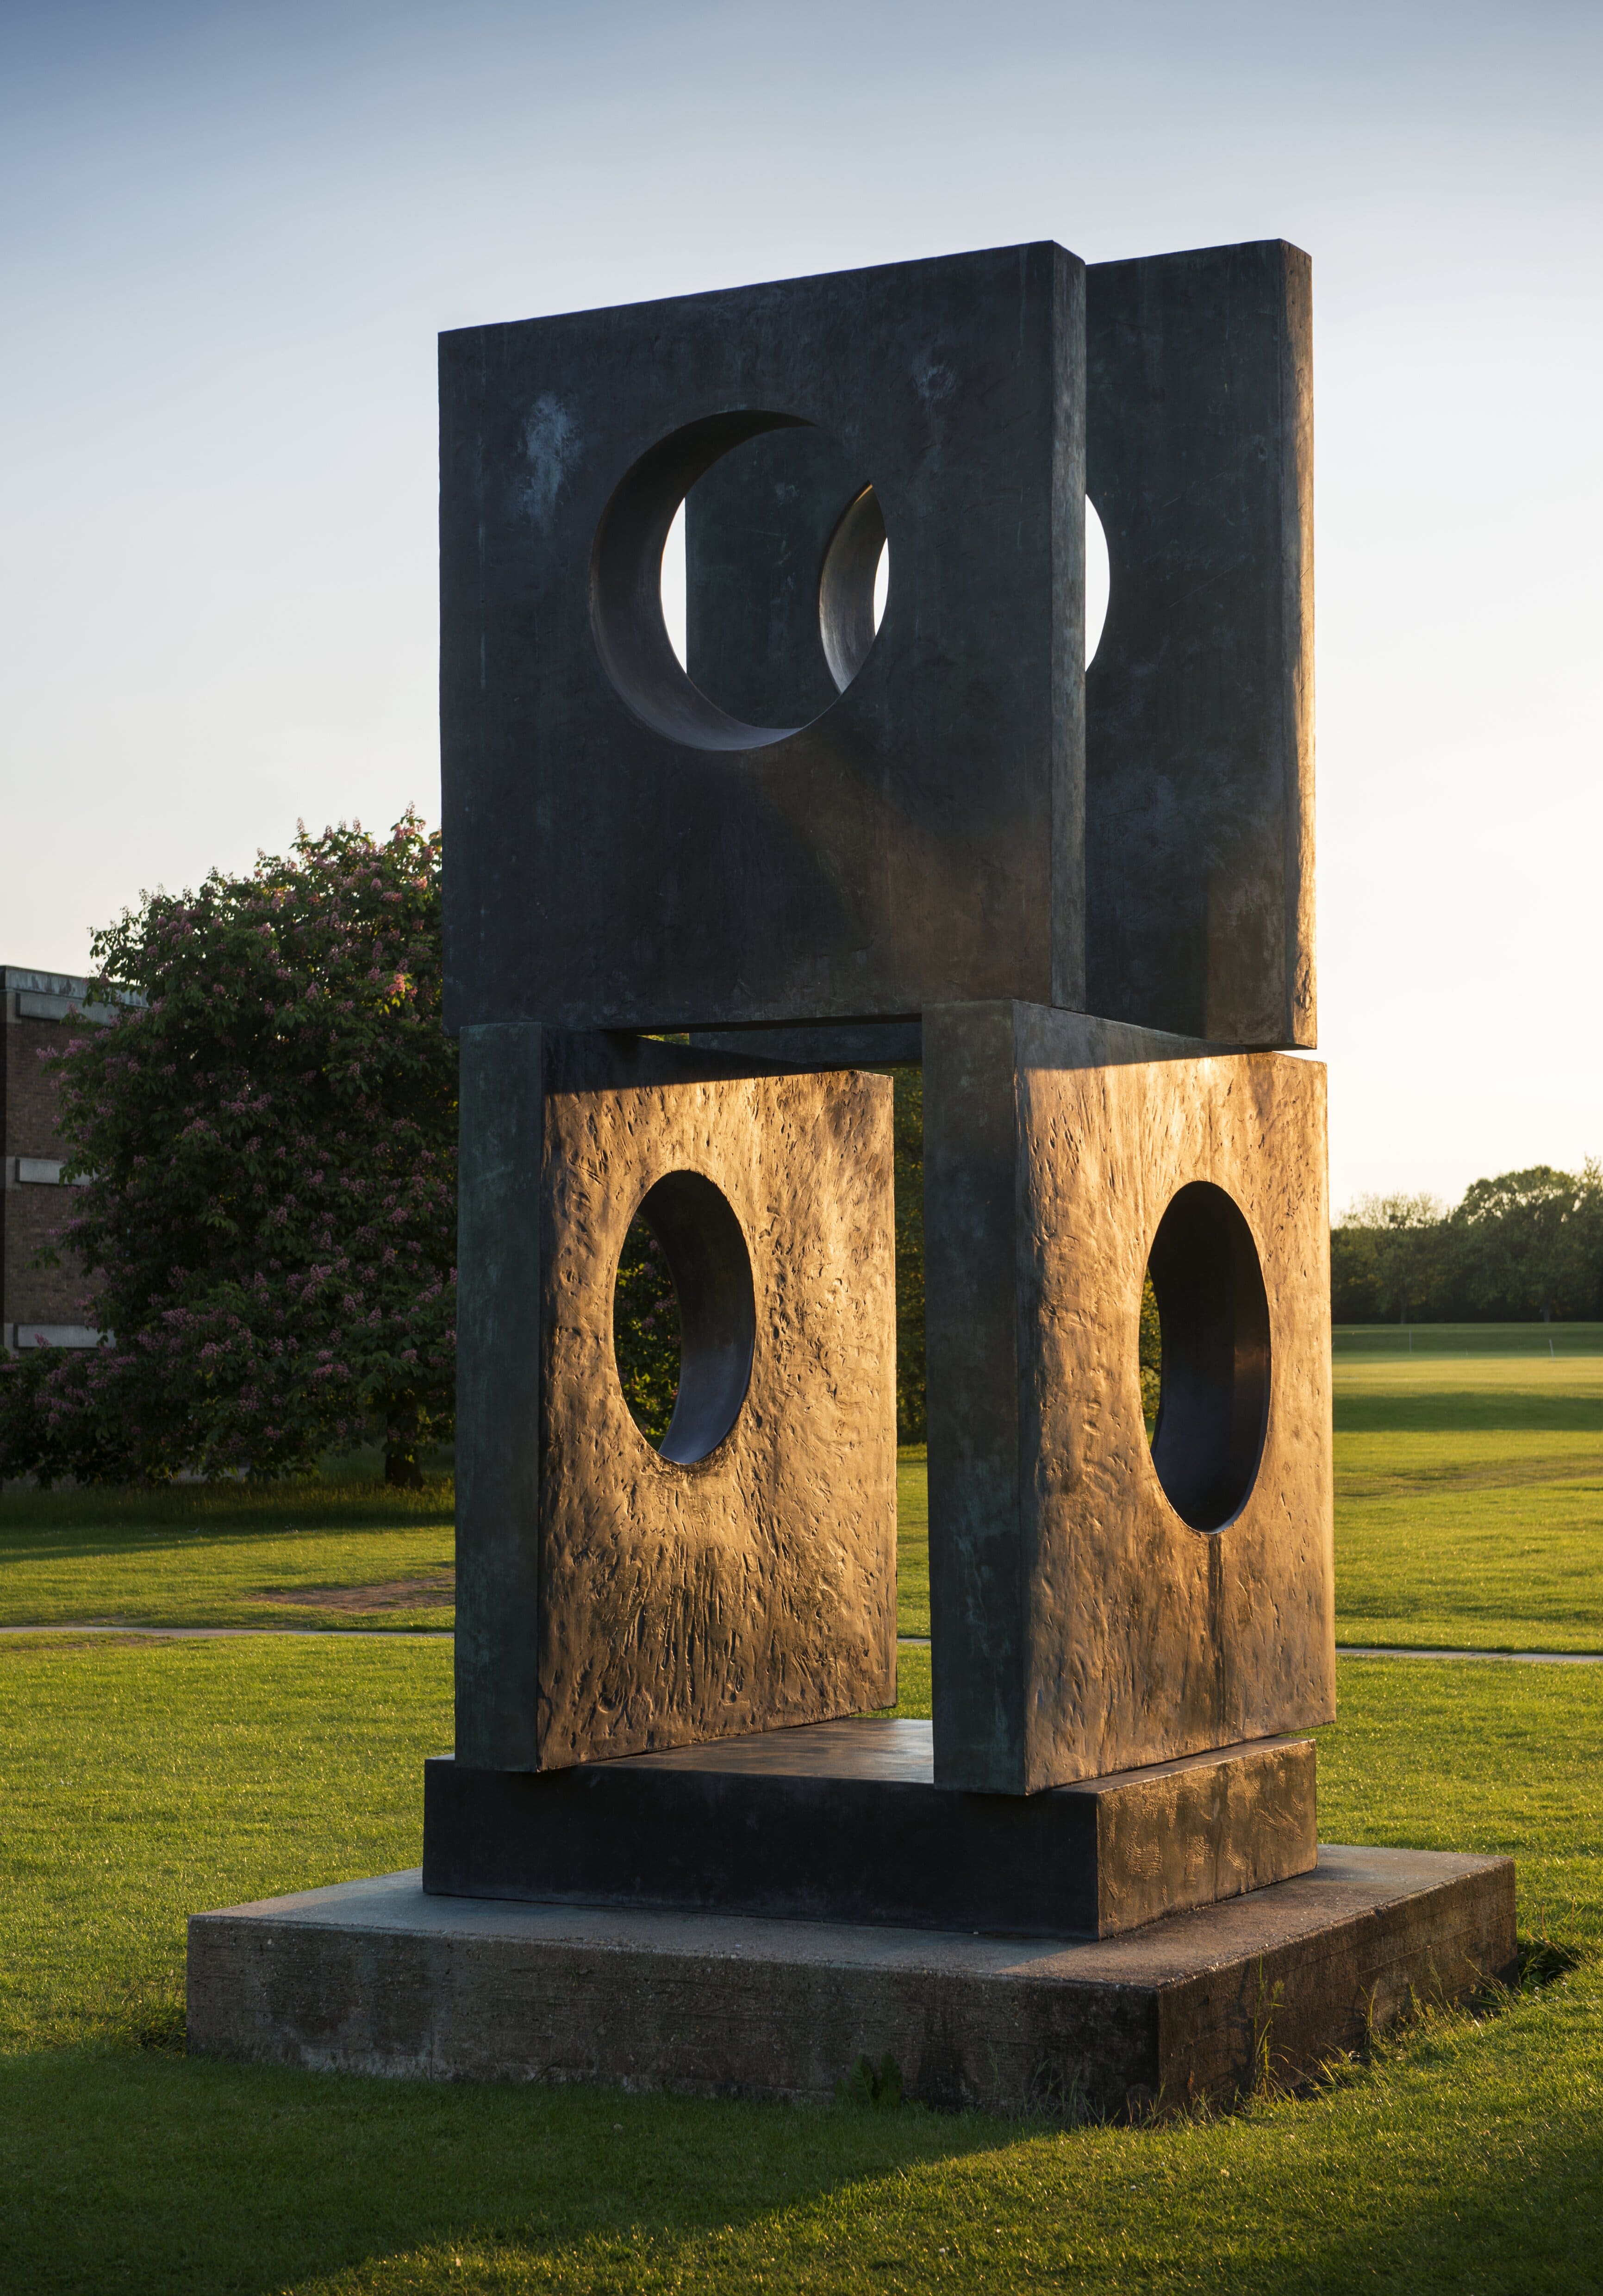 Hepworth created the bronze Four-Square (Walk Through) in 1966